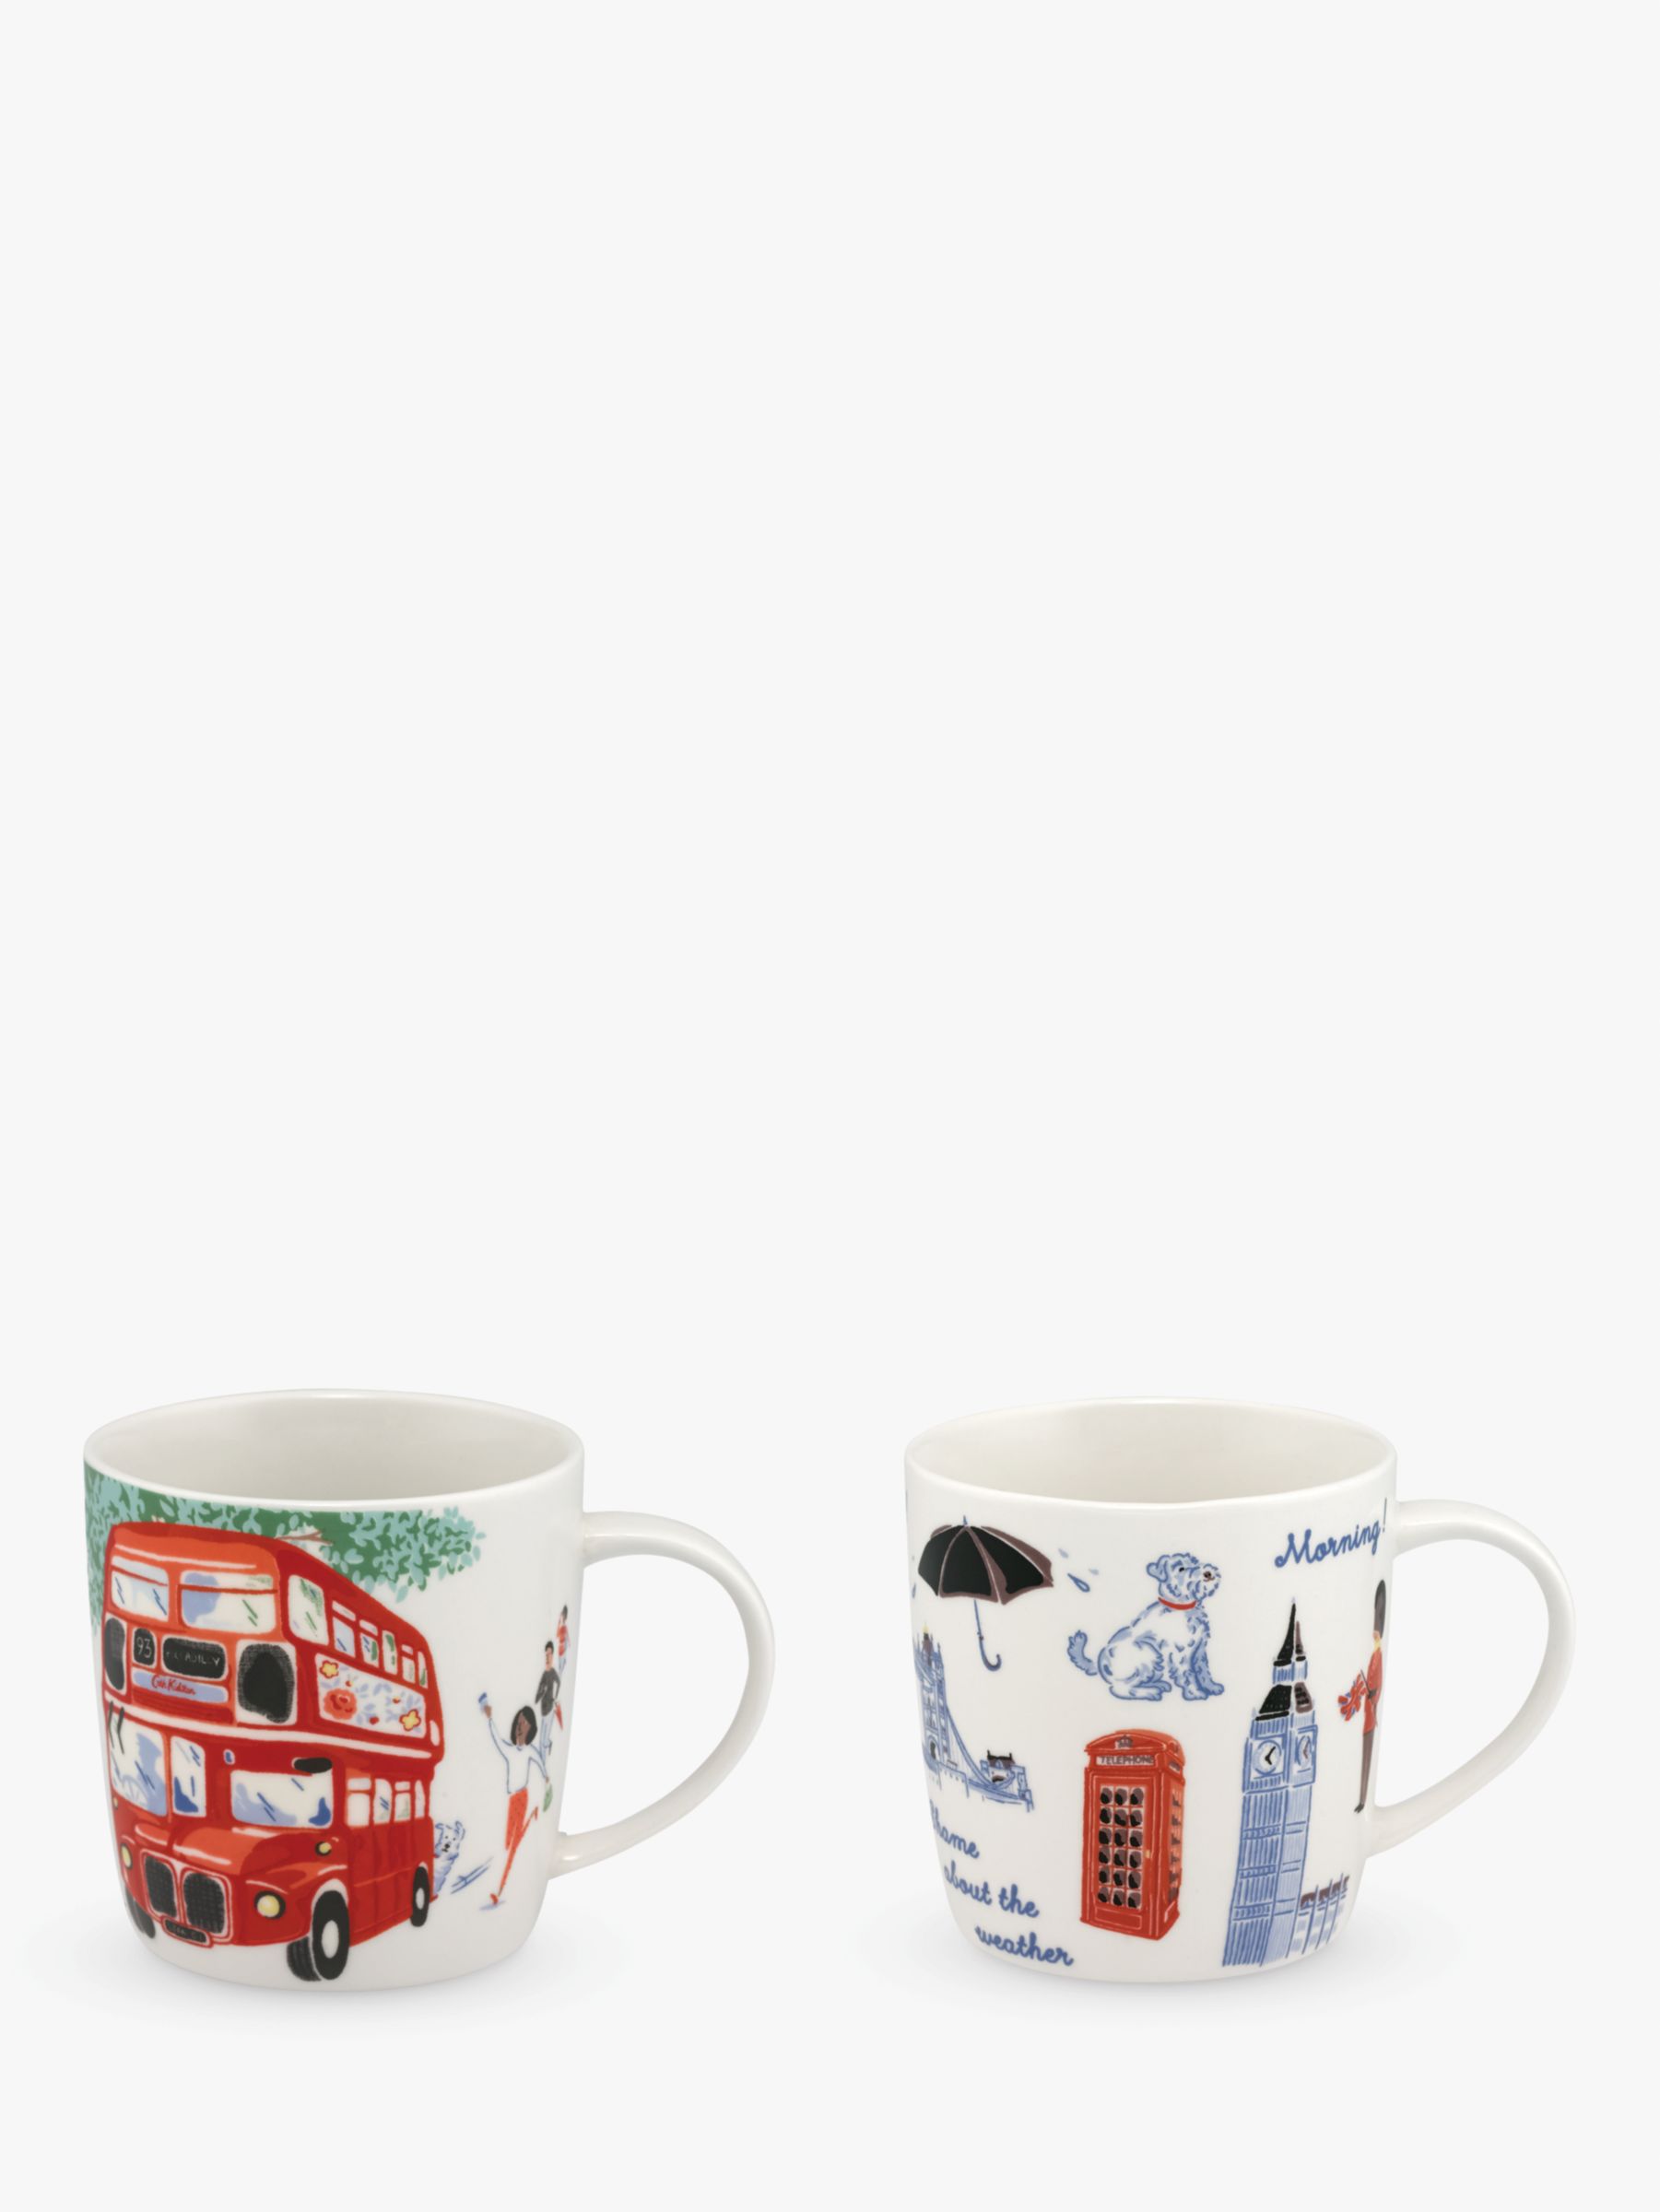 Cath Kidston 'All Aboard' London Mugs 